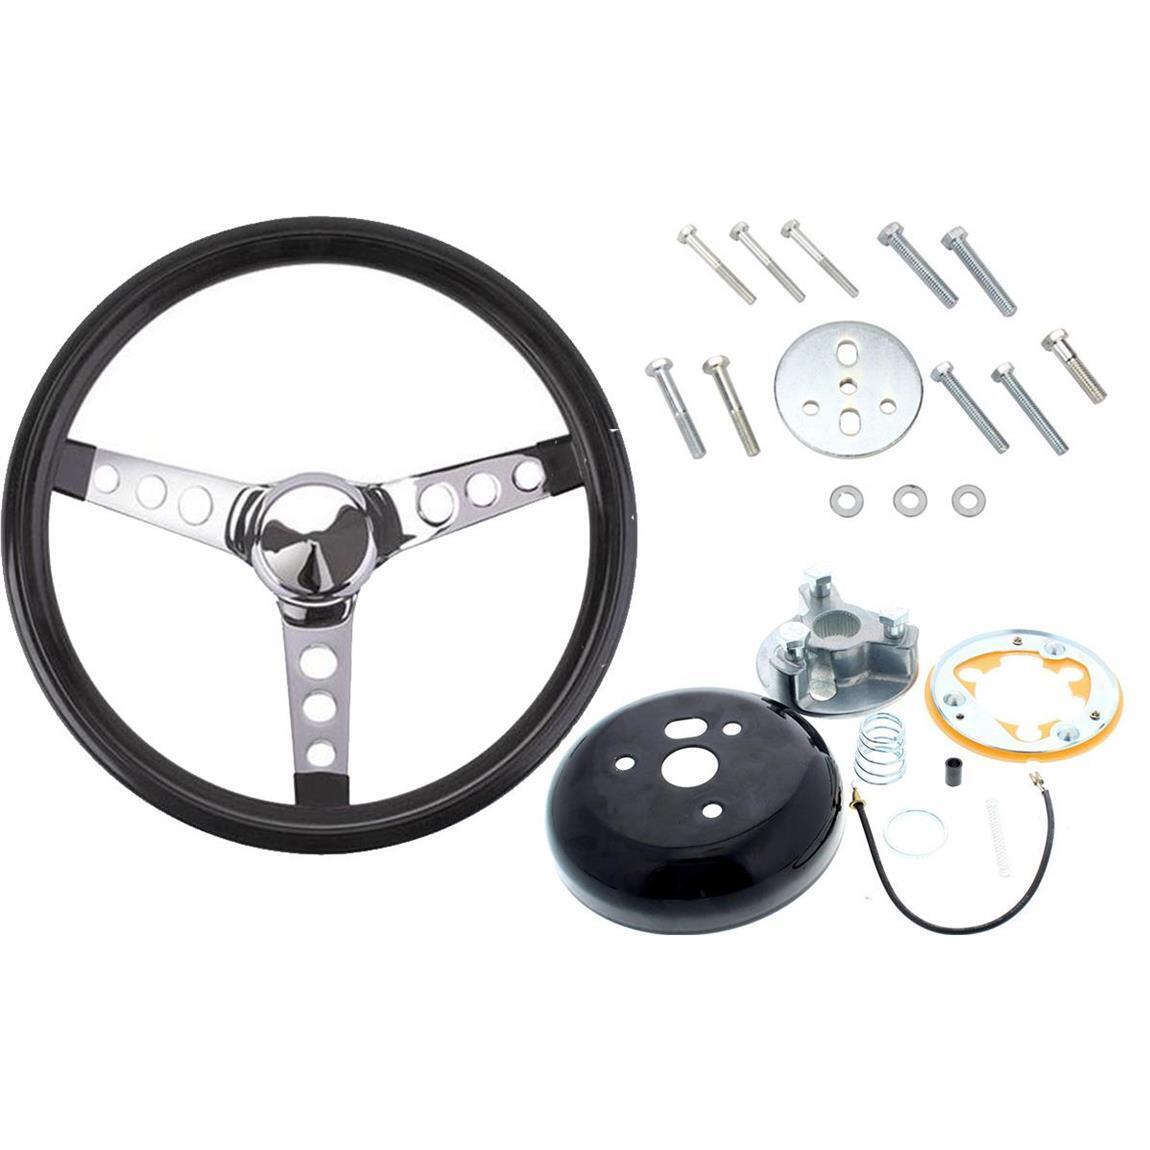 Grant 502 Classic 3-Spk Steering Wheel, 13-1/2 Inch w/Install Kit